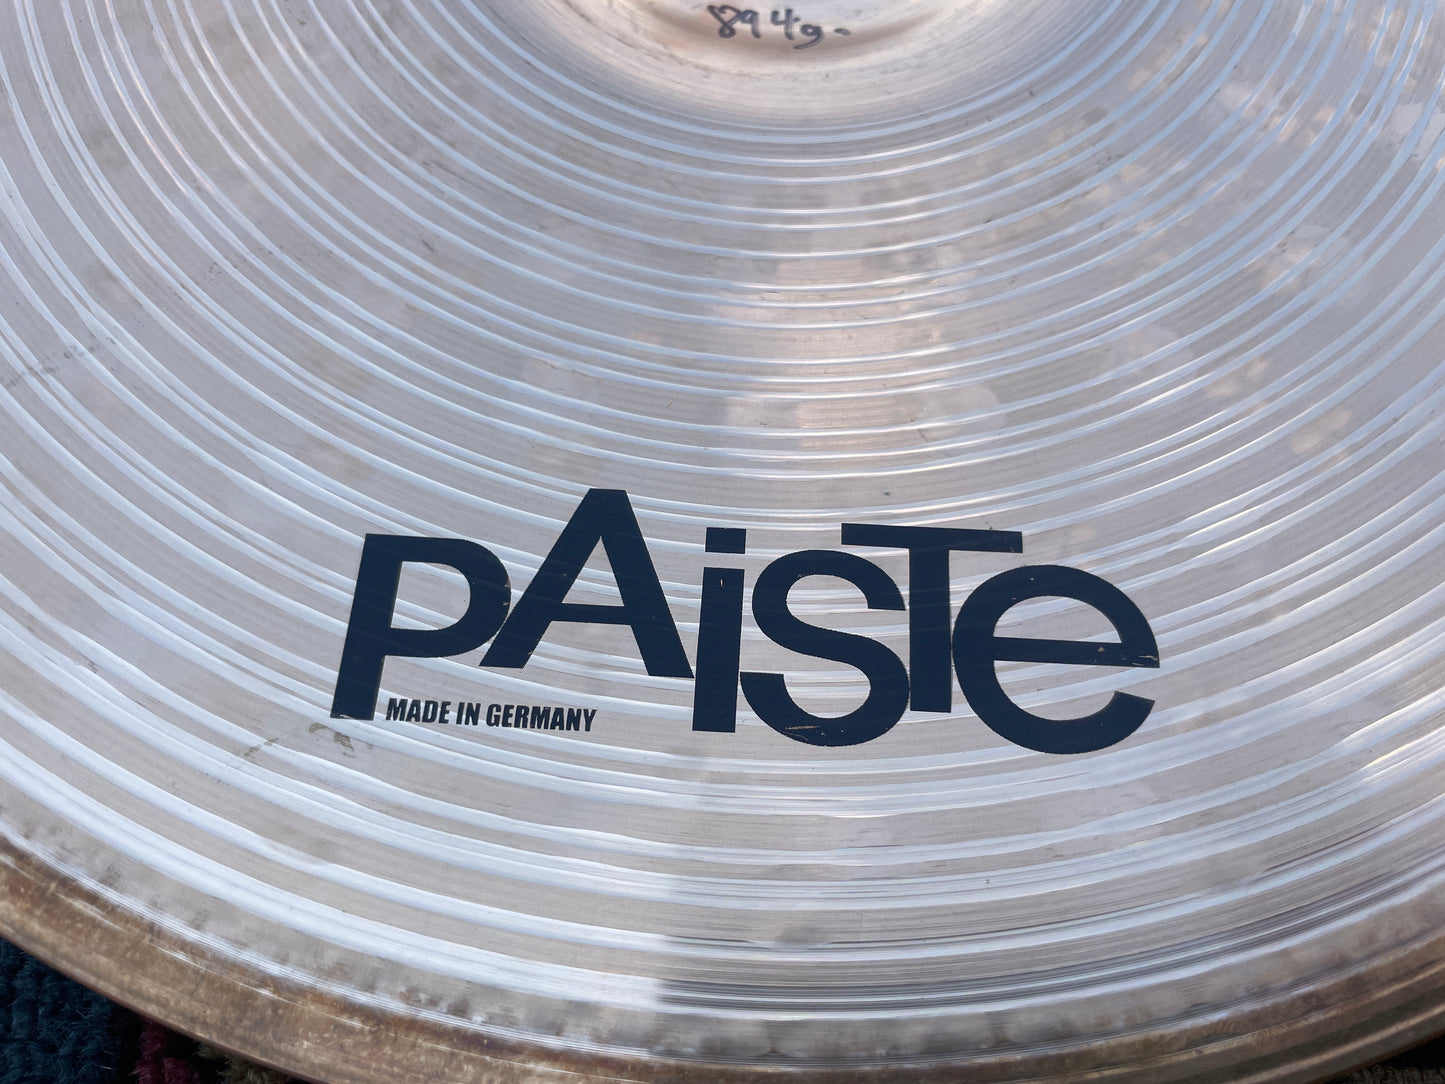 14" Paiste Alpha Sound Edge Hi-Hat Cymbal Pair 894g/1052g